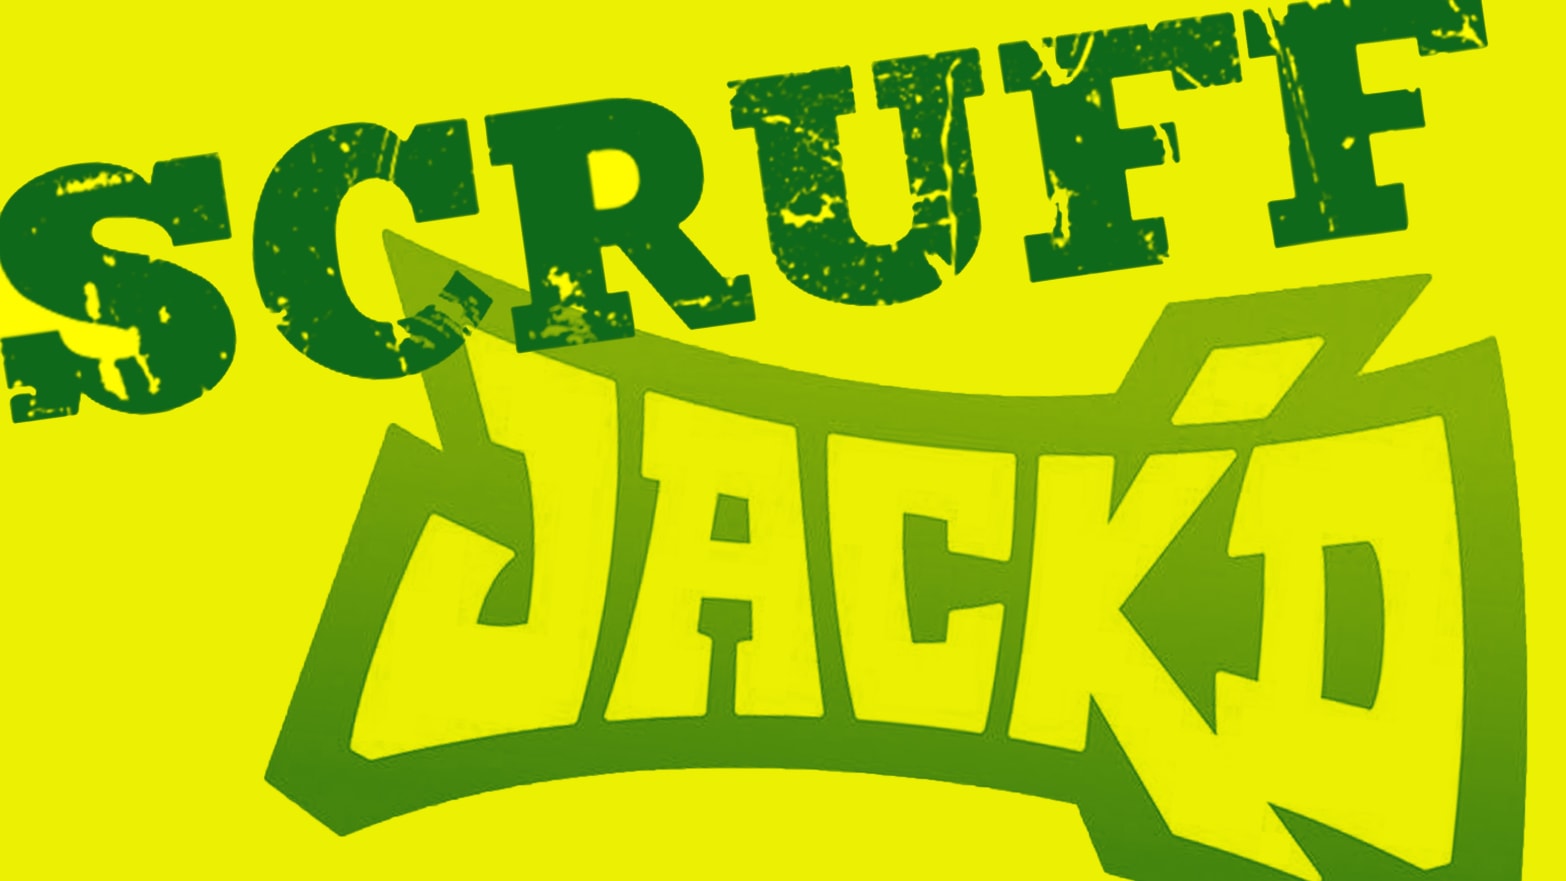 Jackd bought by Scruff following data breach - Attitude.co.uk